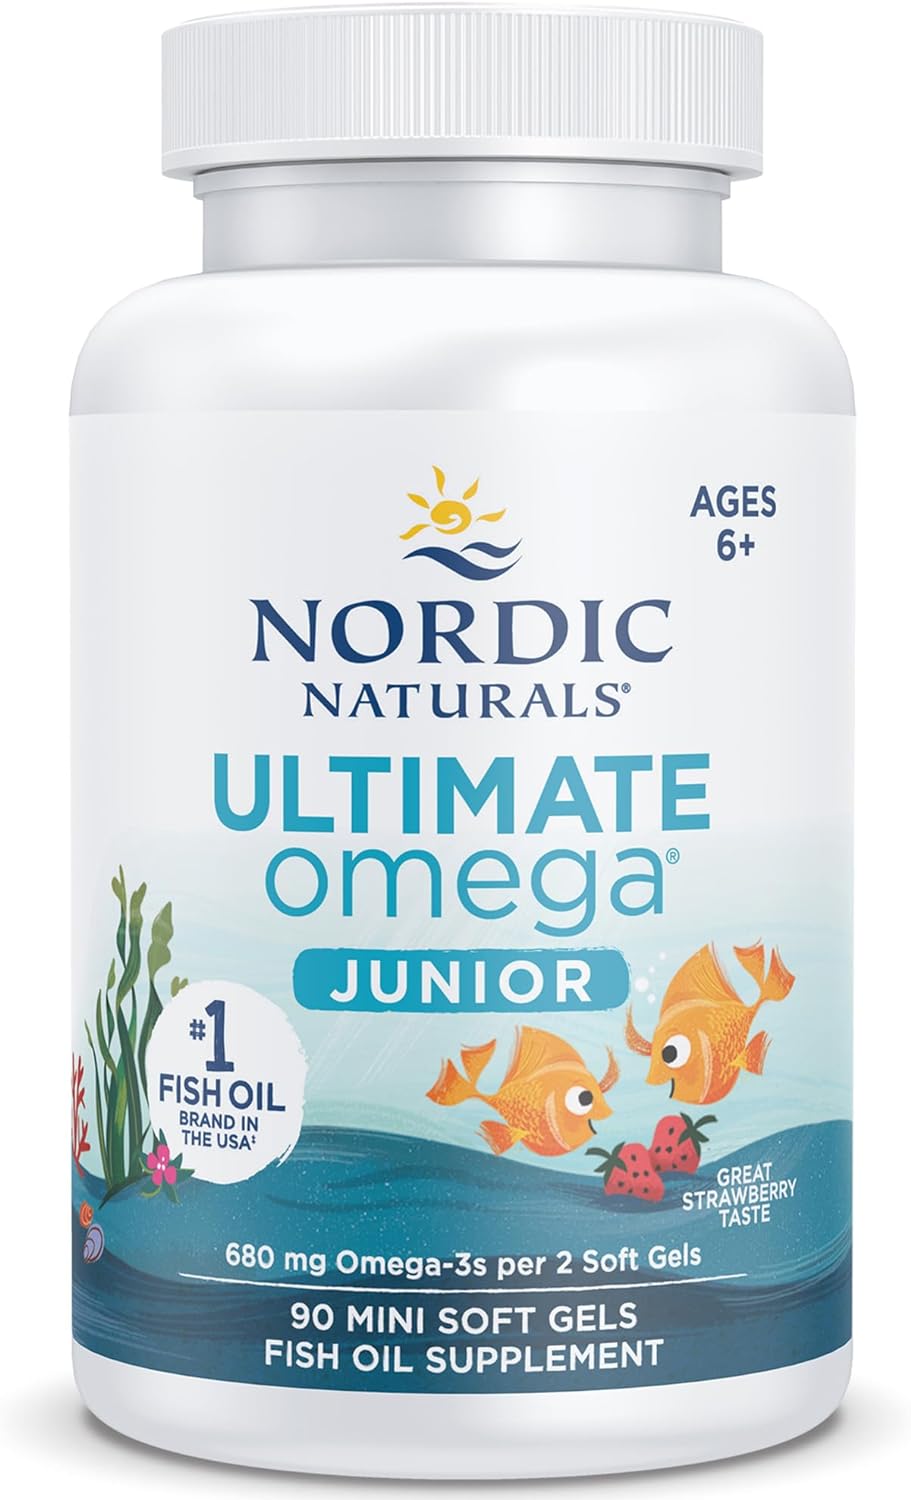 Nordic Naturals Ultimate Omega Junior